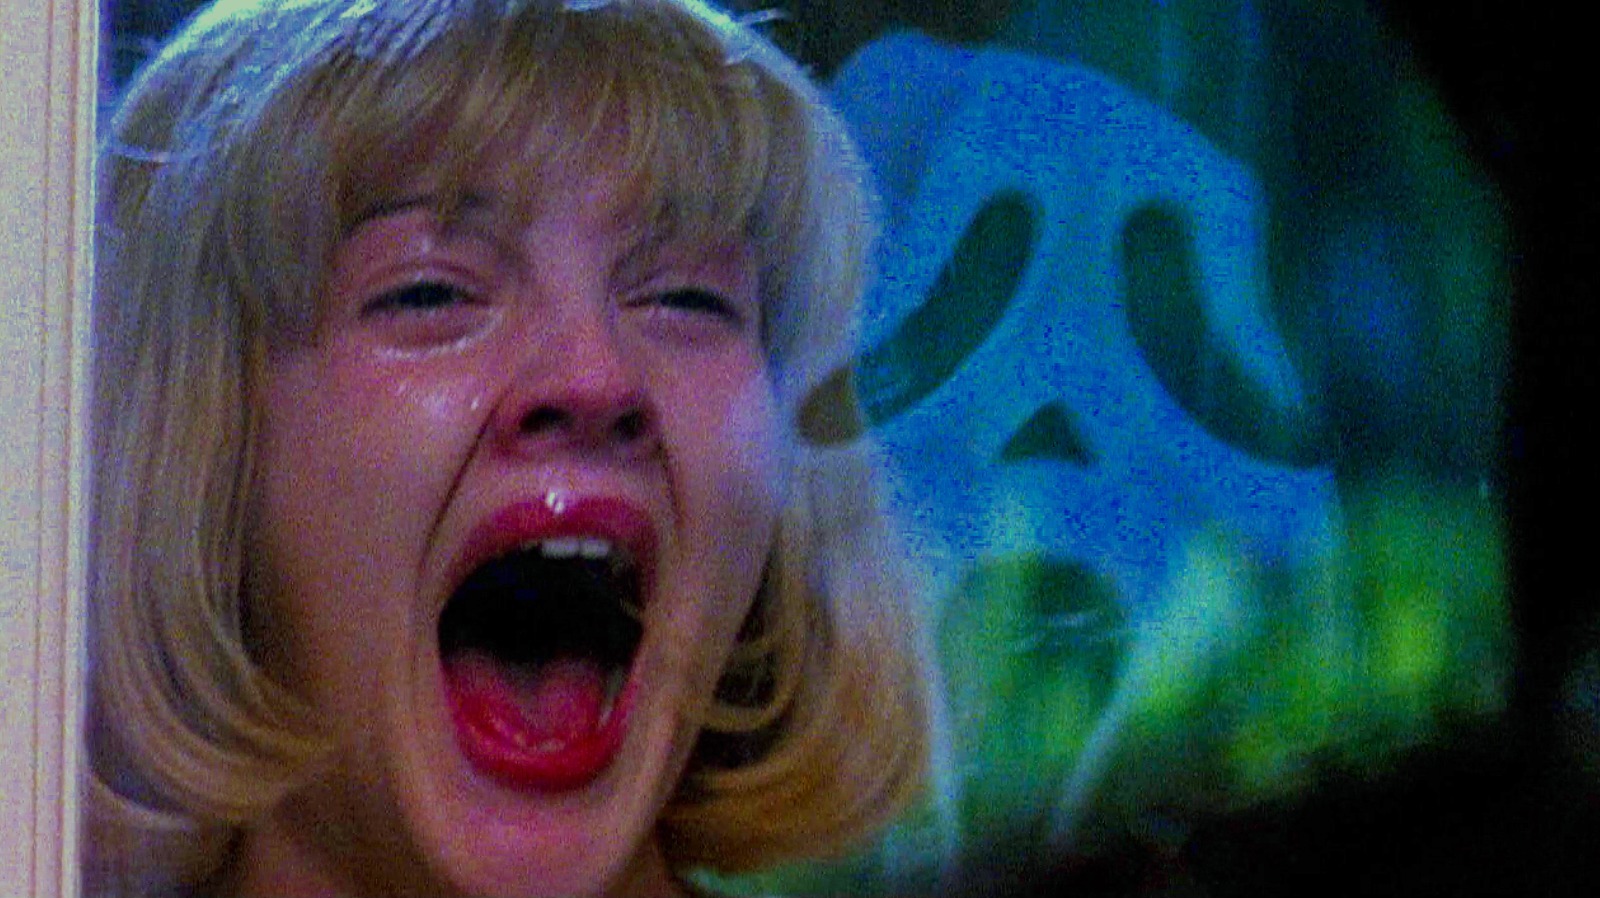 Scream 6: The Most Disturbing Moments, Ranked